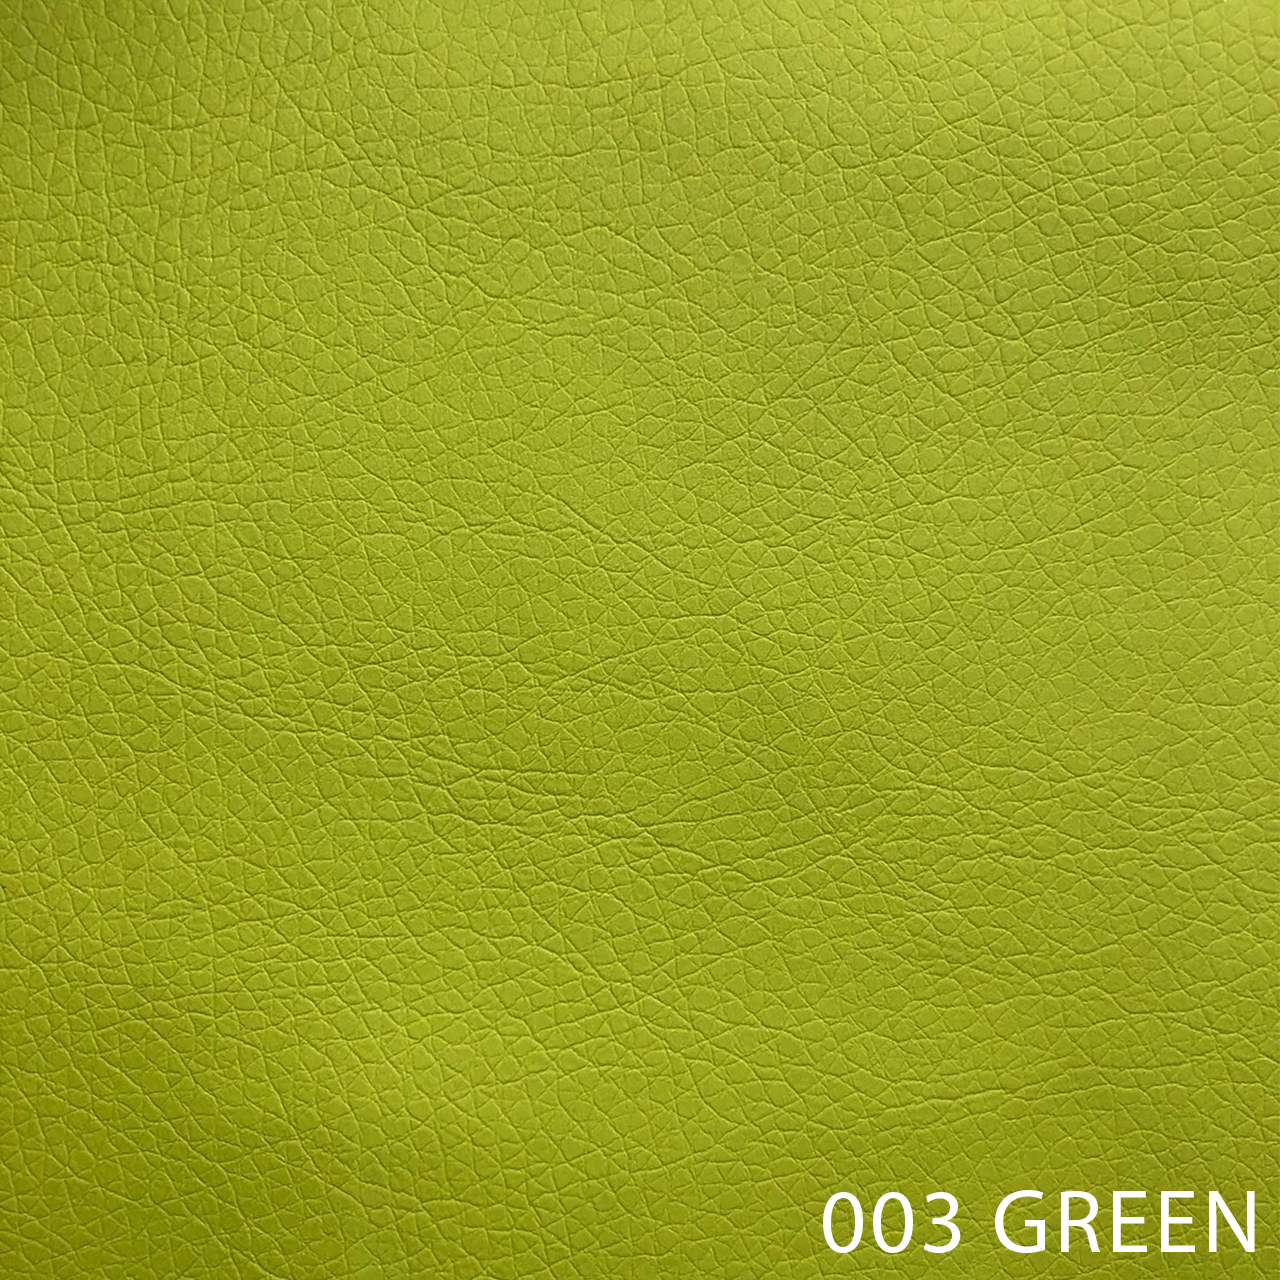 003 GREEN